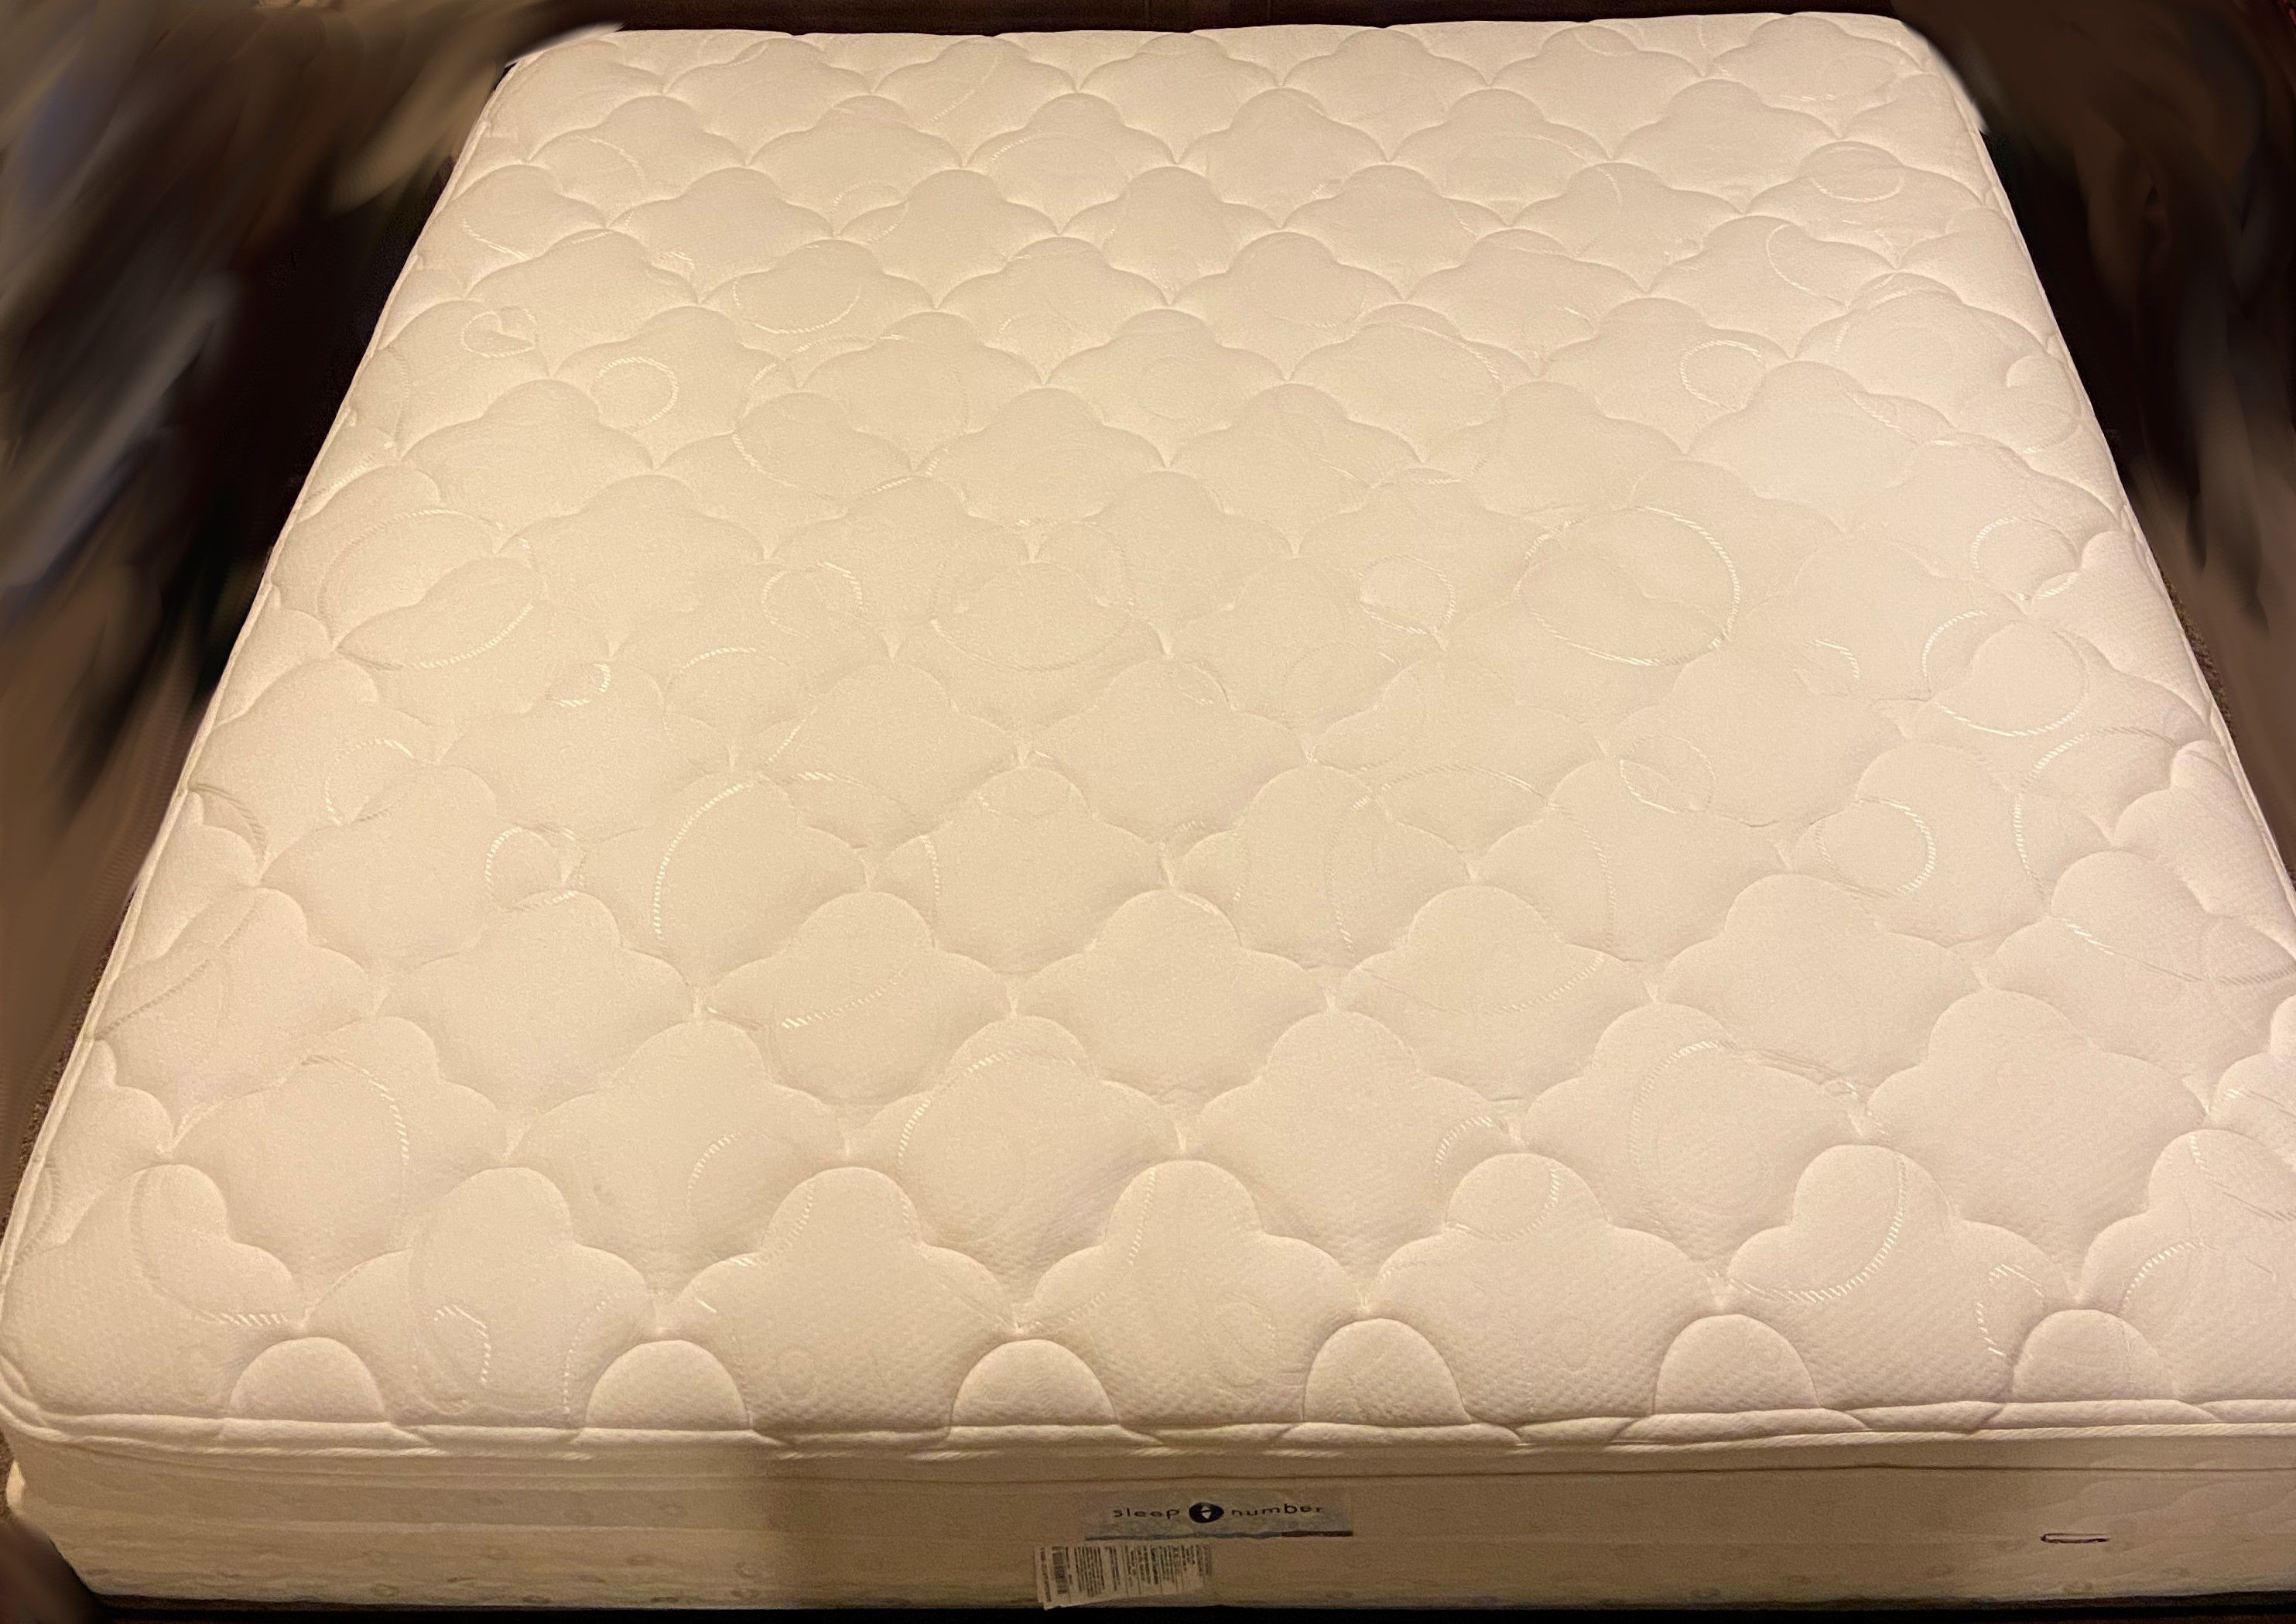 sleep number c4 king mattress adjustable firmness